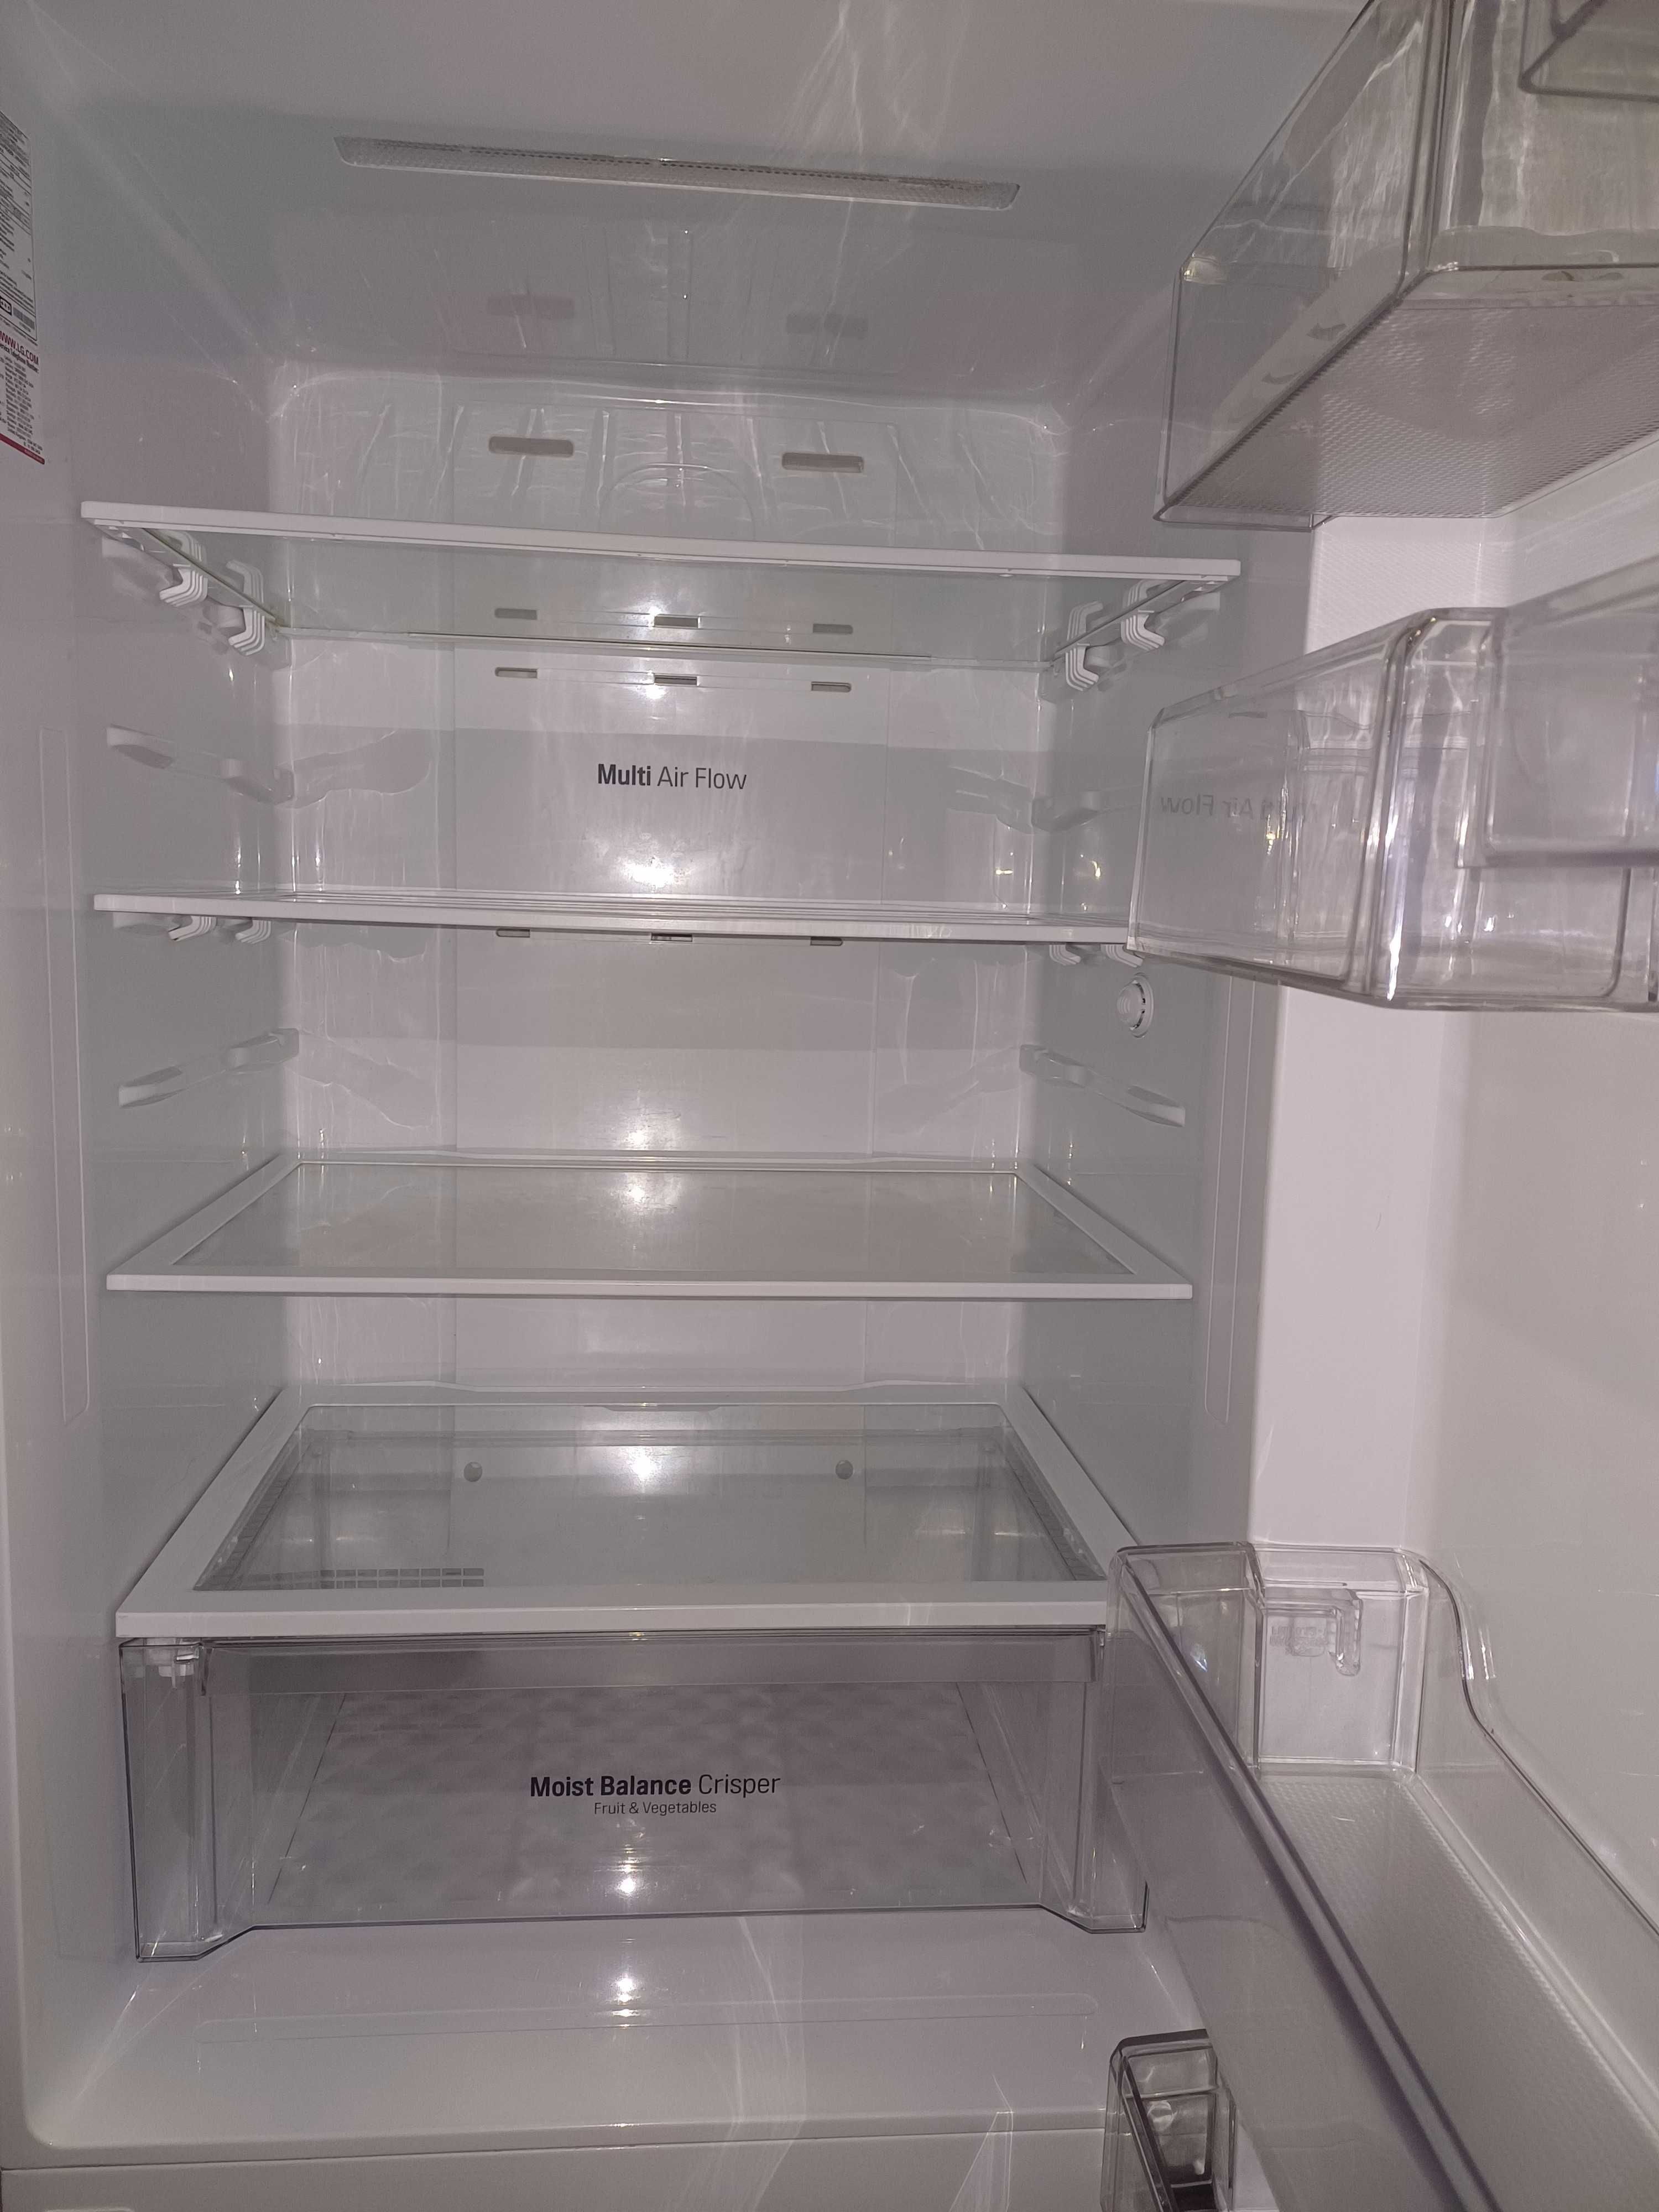 Холодильник двокамерний Beko K70520NE (188 см) з Туреччини